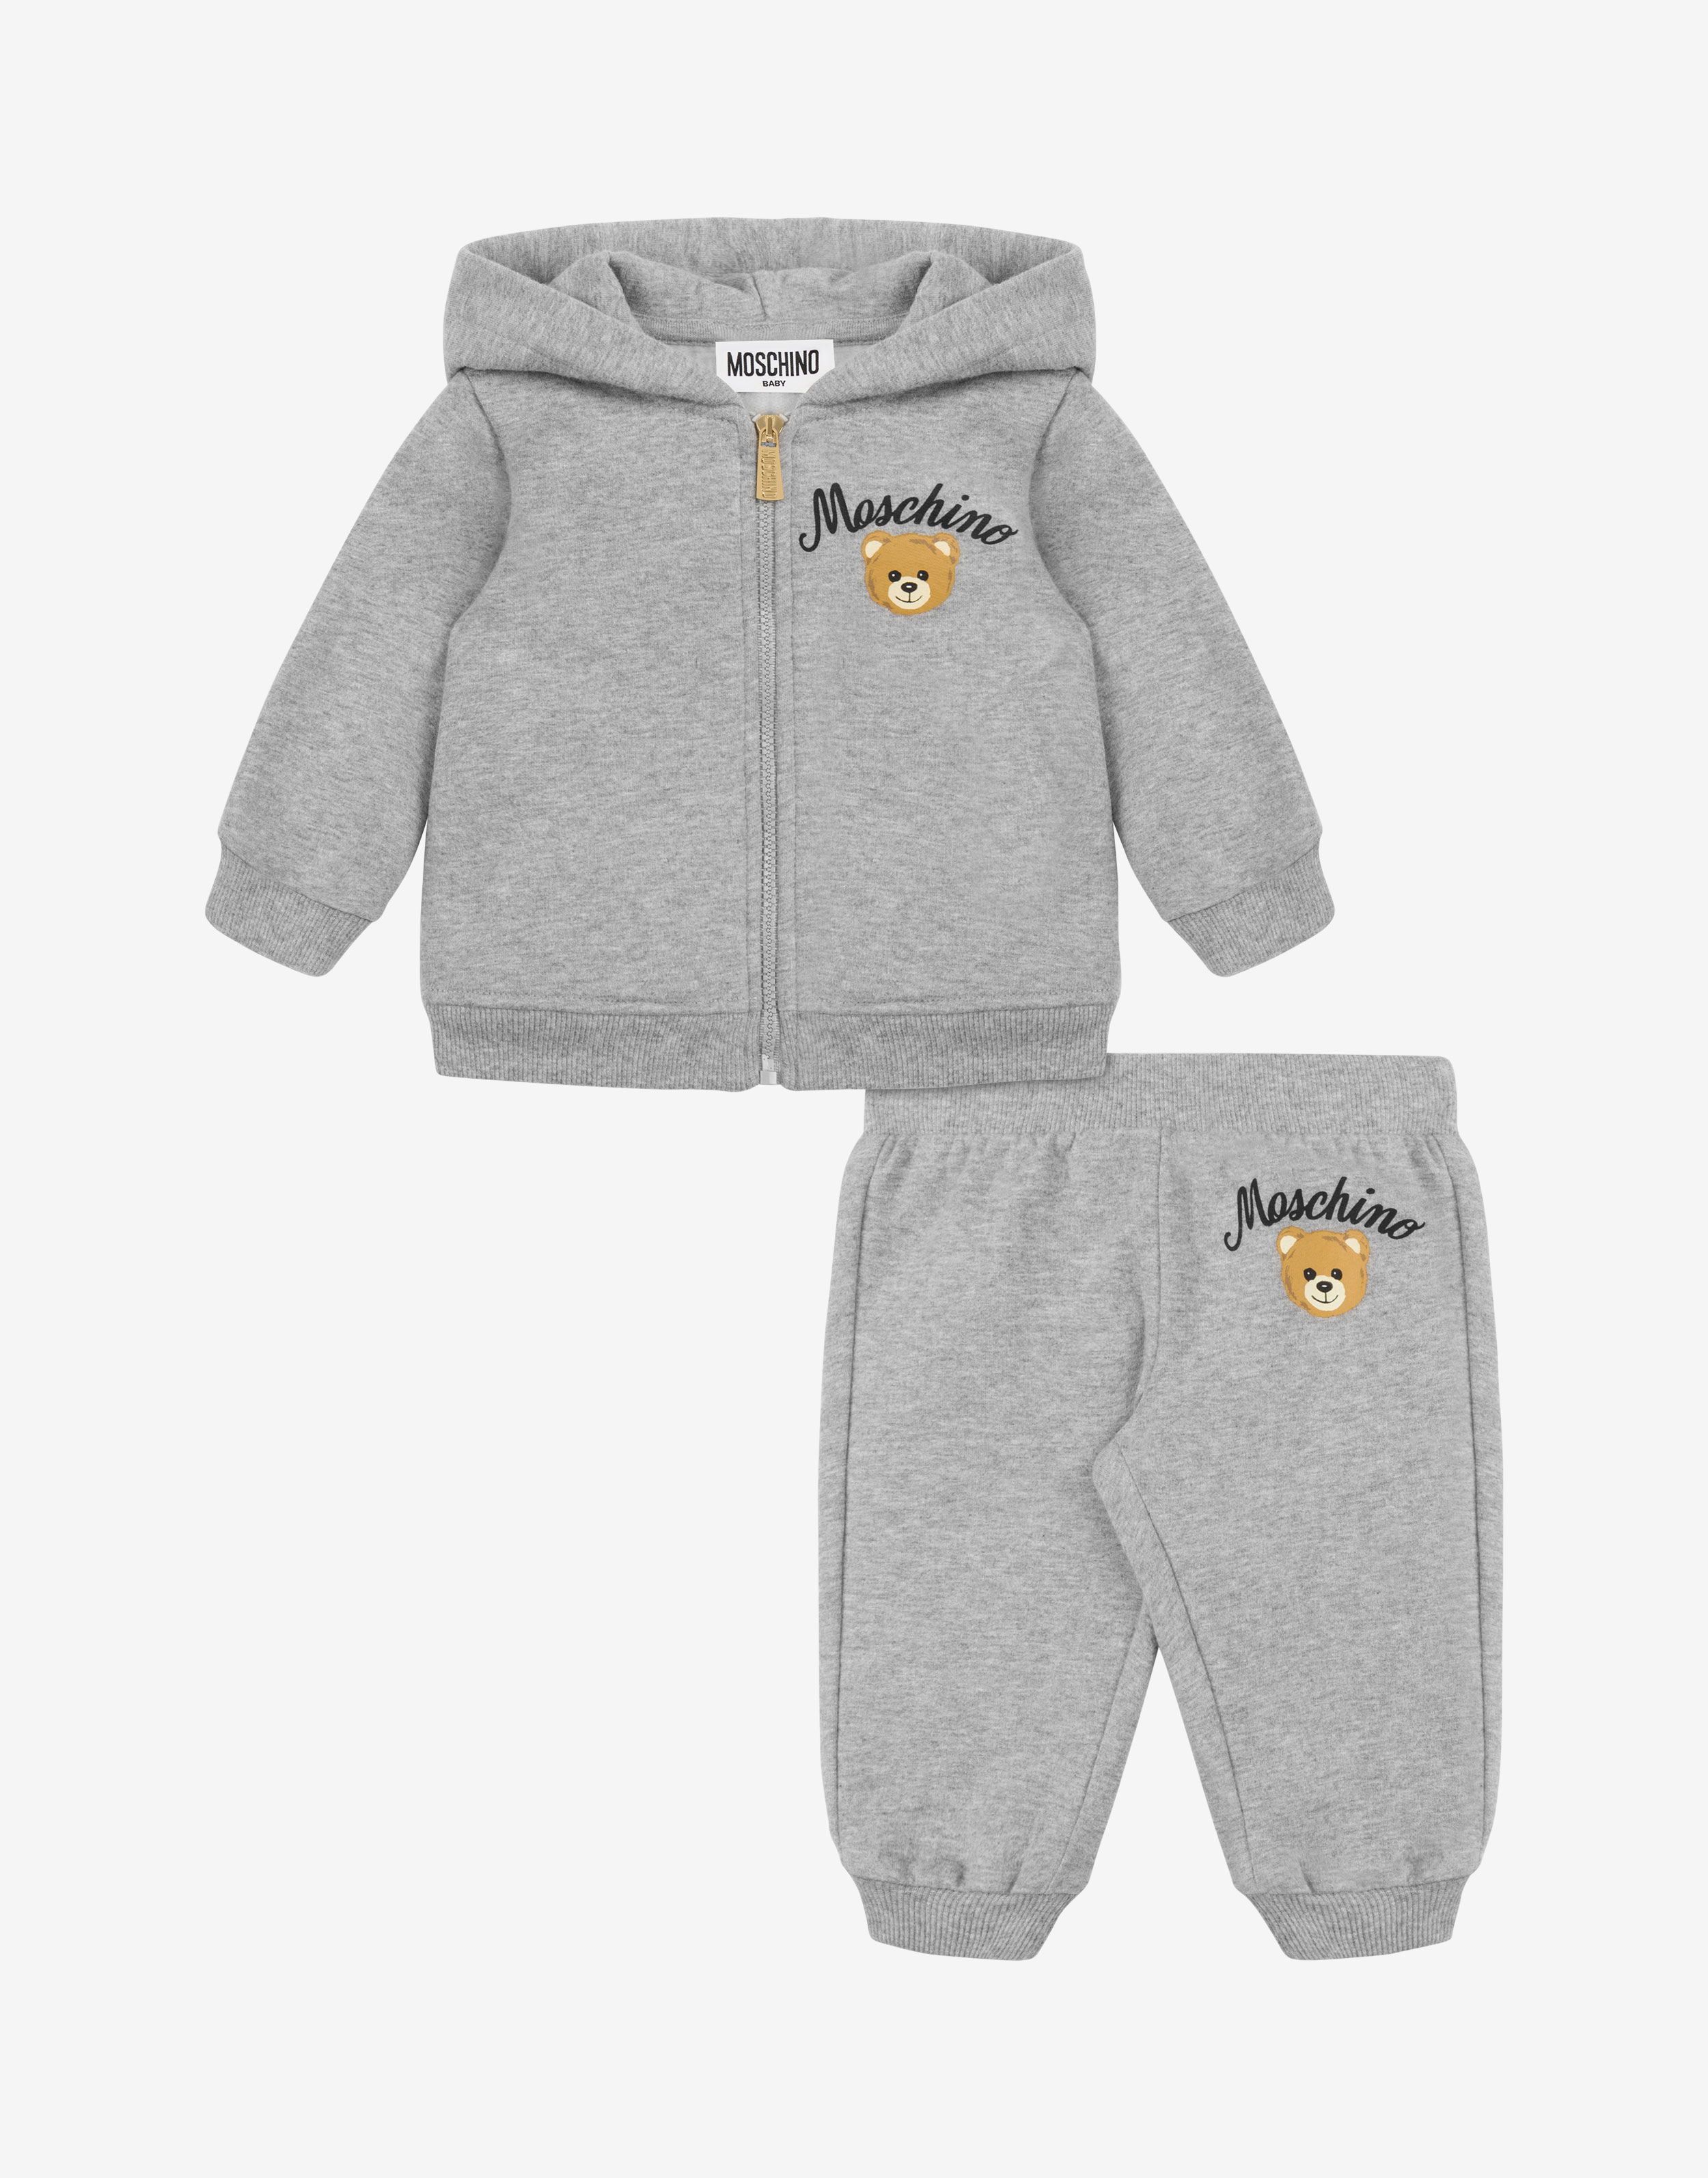 Moschino Teddy Bear fleece tracksuit | Moschino Official Store